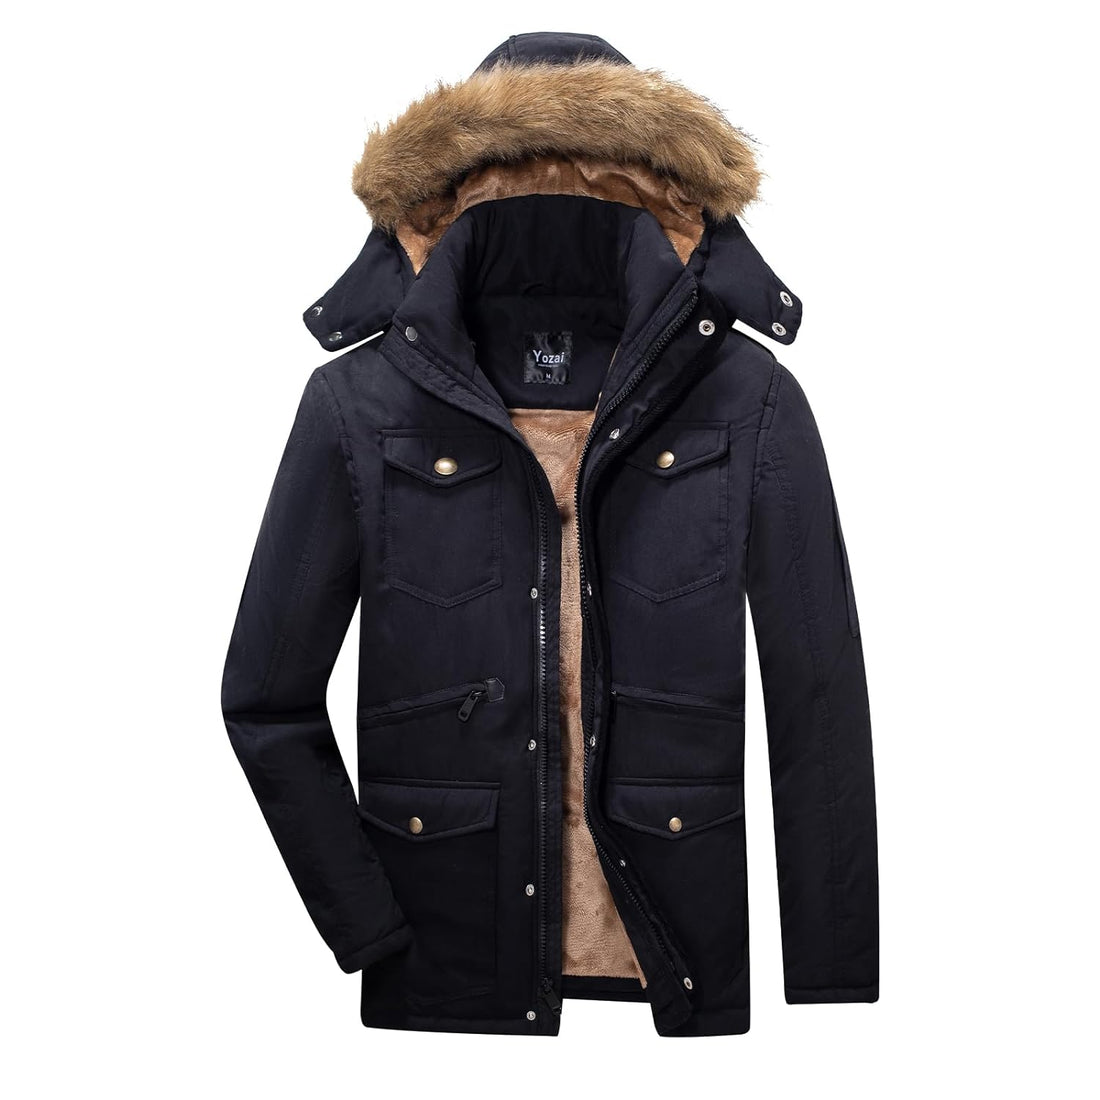 Yozai Mens Winter Military Warm Jacket Fleece Coat with Detachable Fur Hood Outwear Black Medium